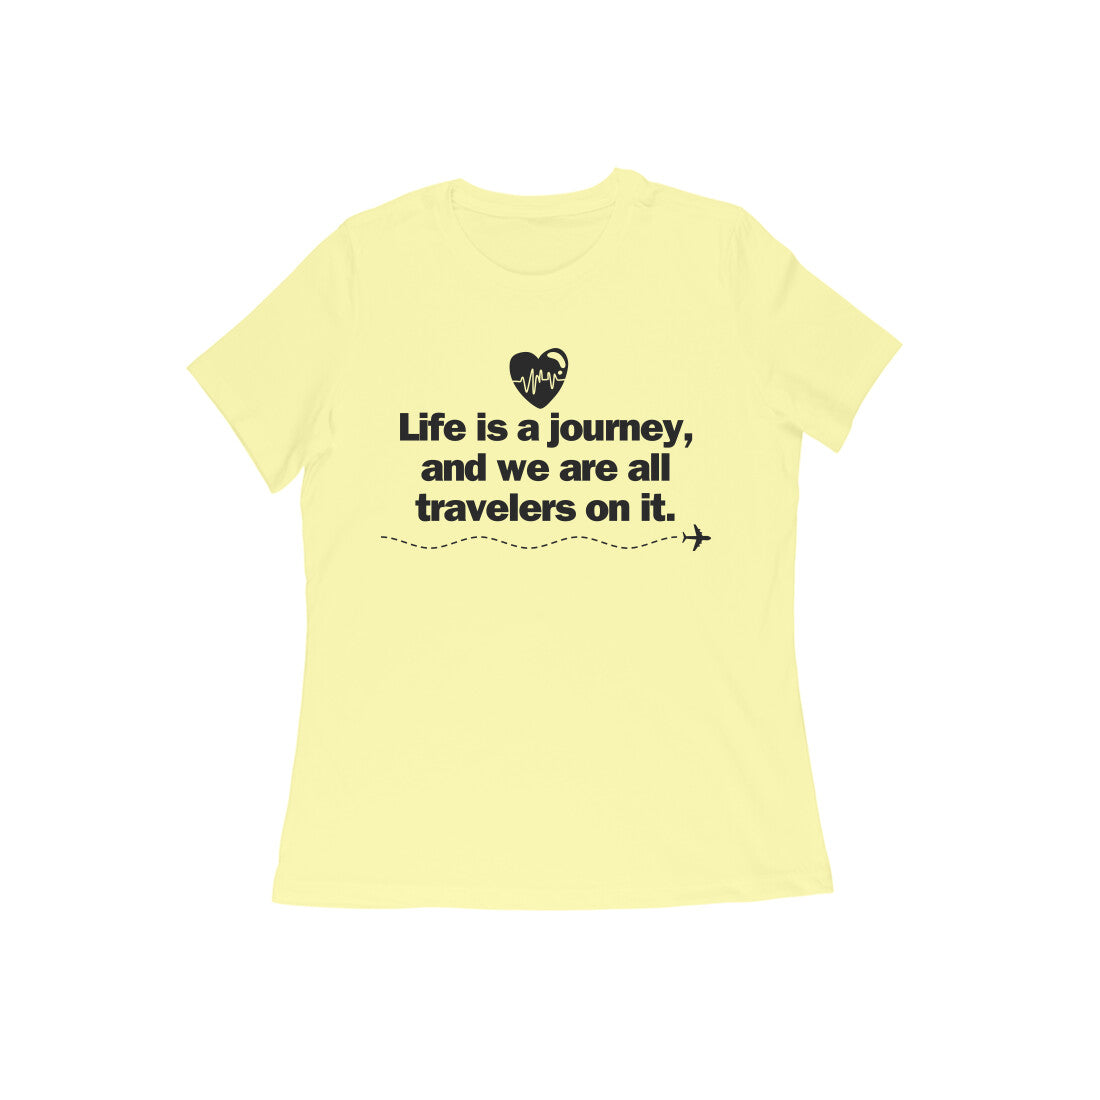 Life is a journey... Black Text Women's T-shirt